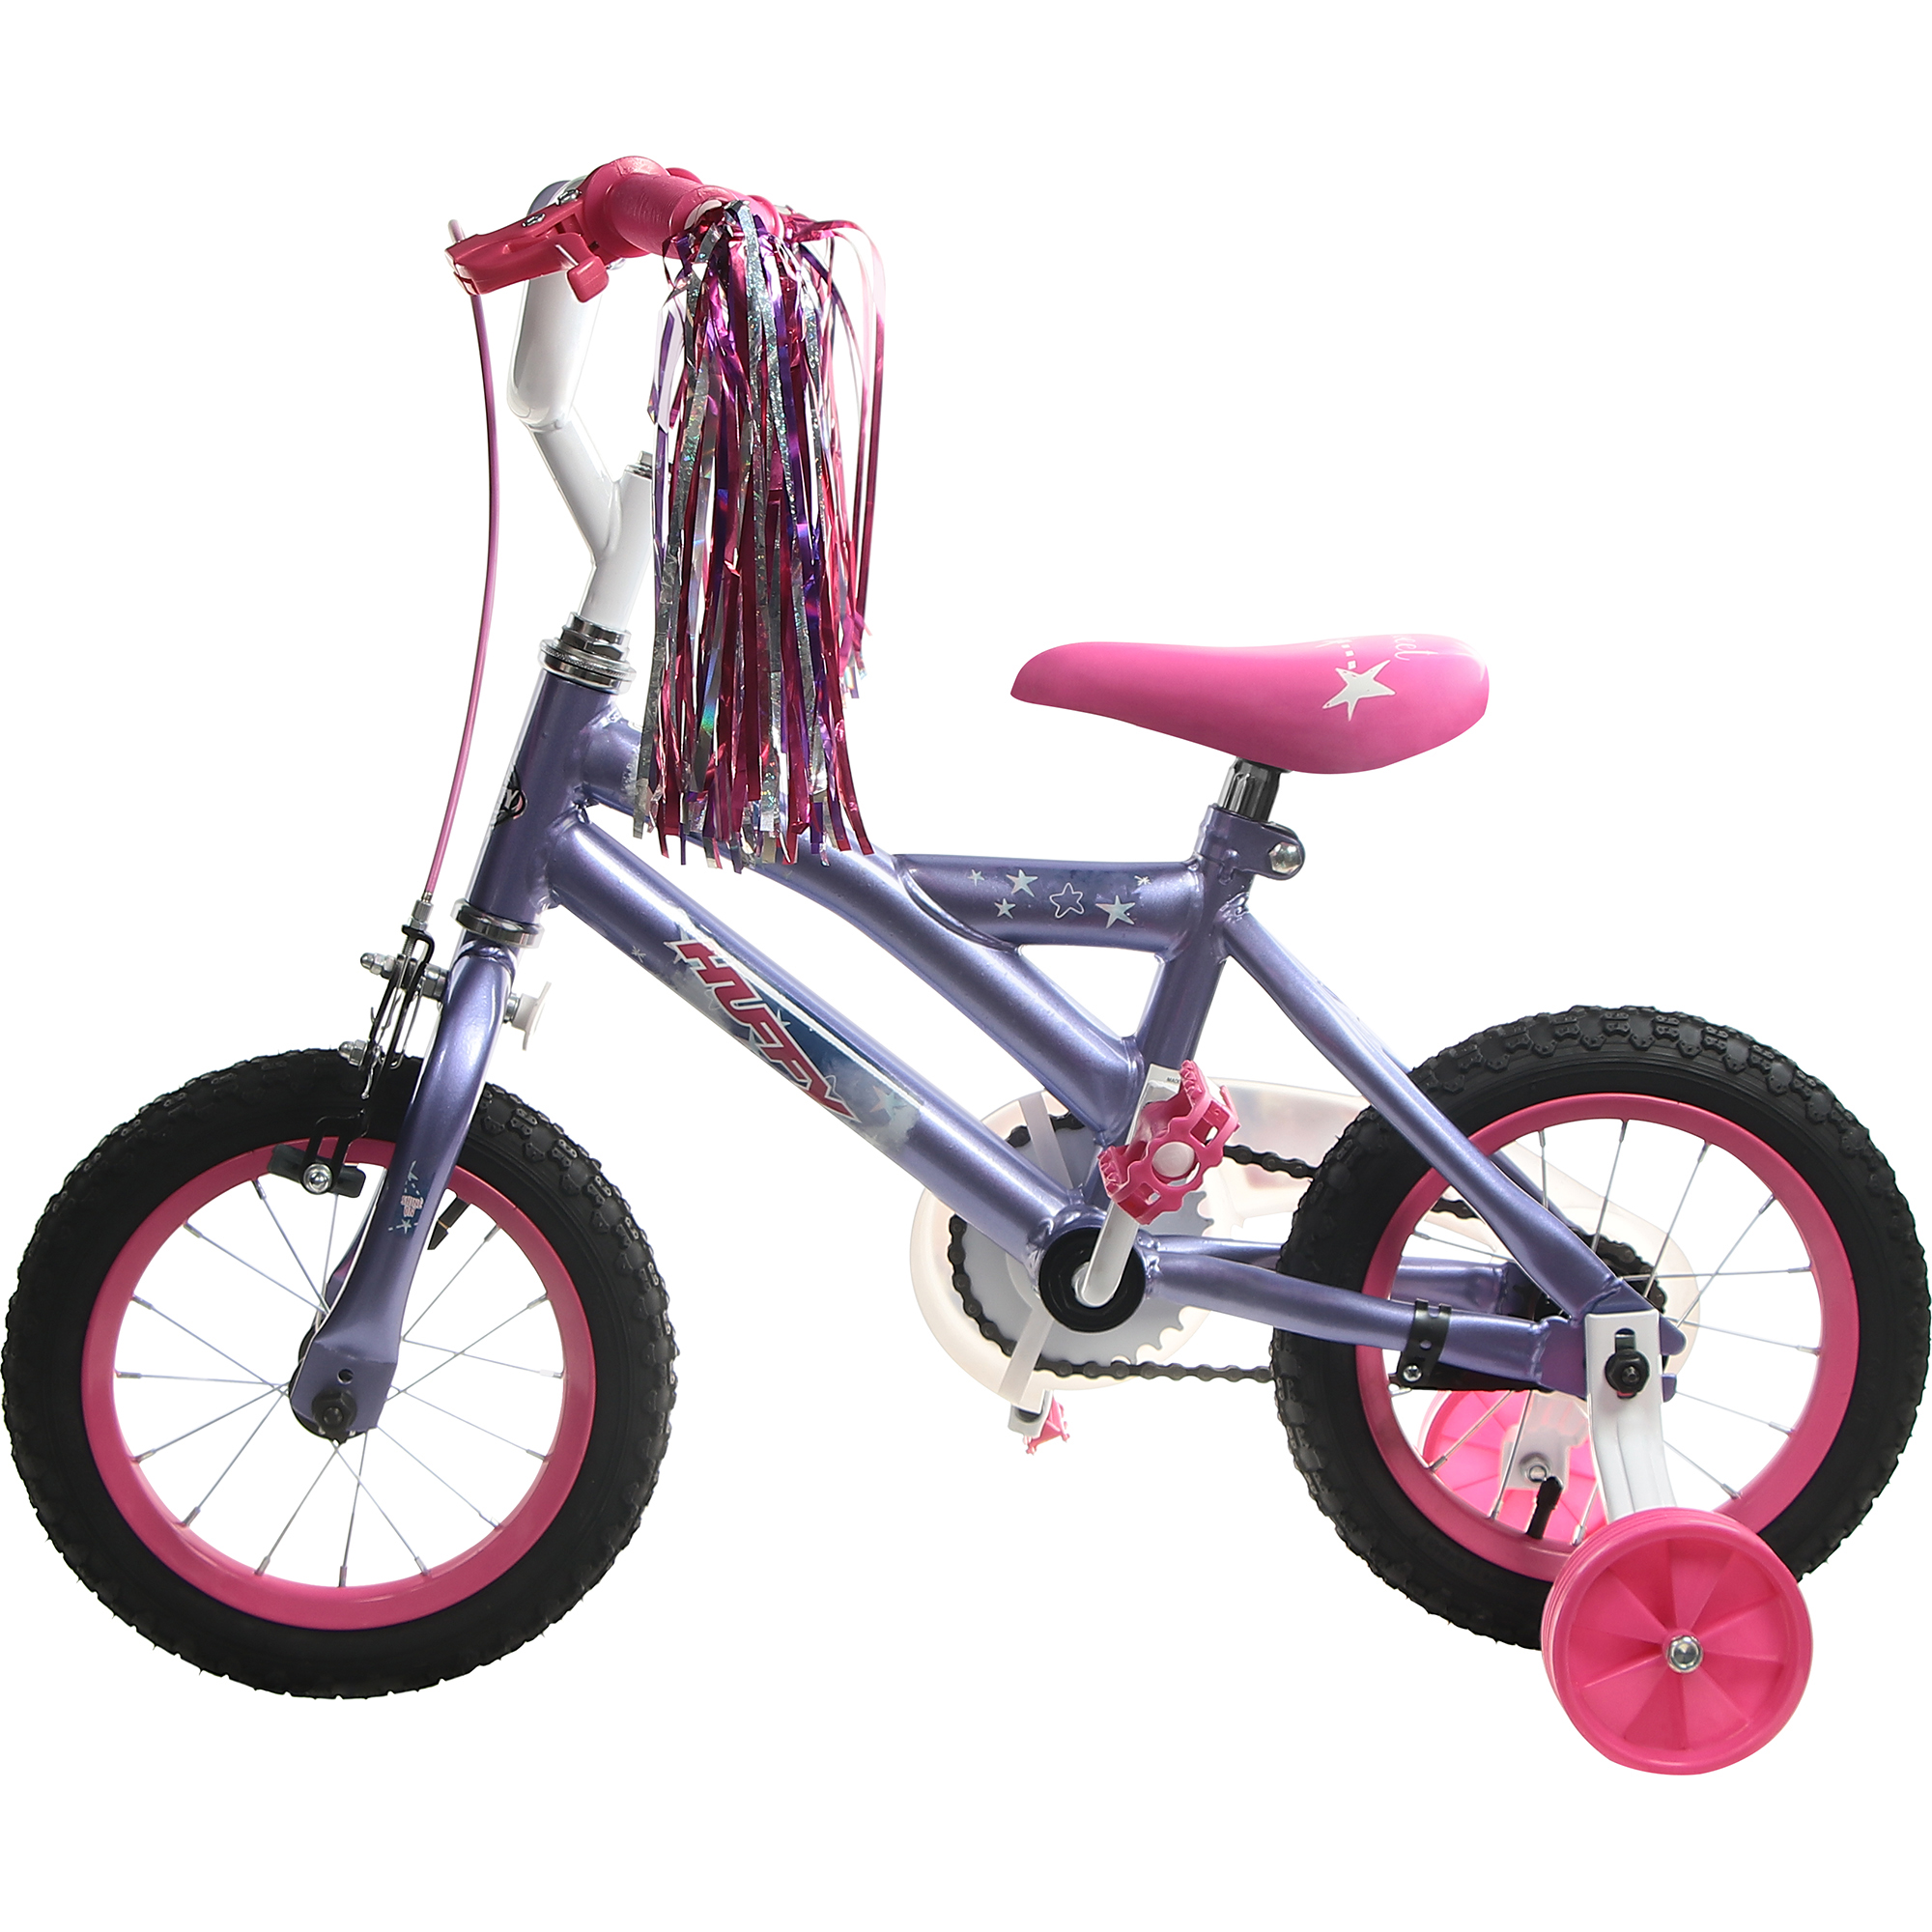 Велосипед детский Huffy So sweet, 12, для девочек велосипед детский huffy delirium 16 для мальчиков